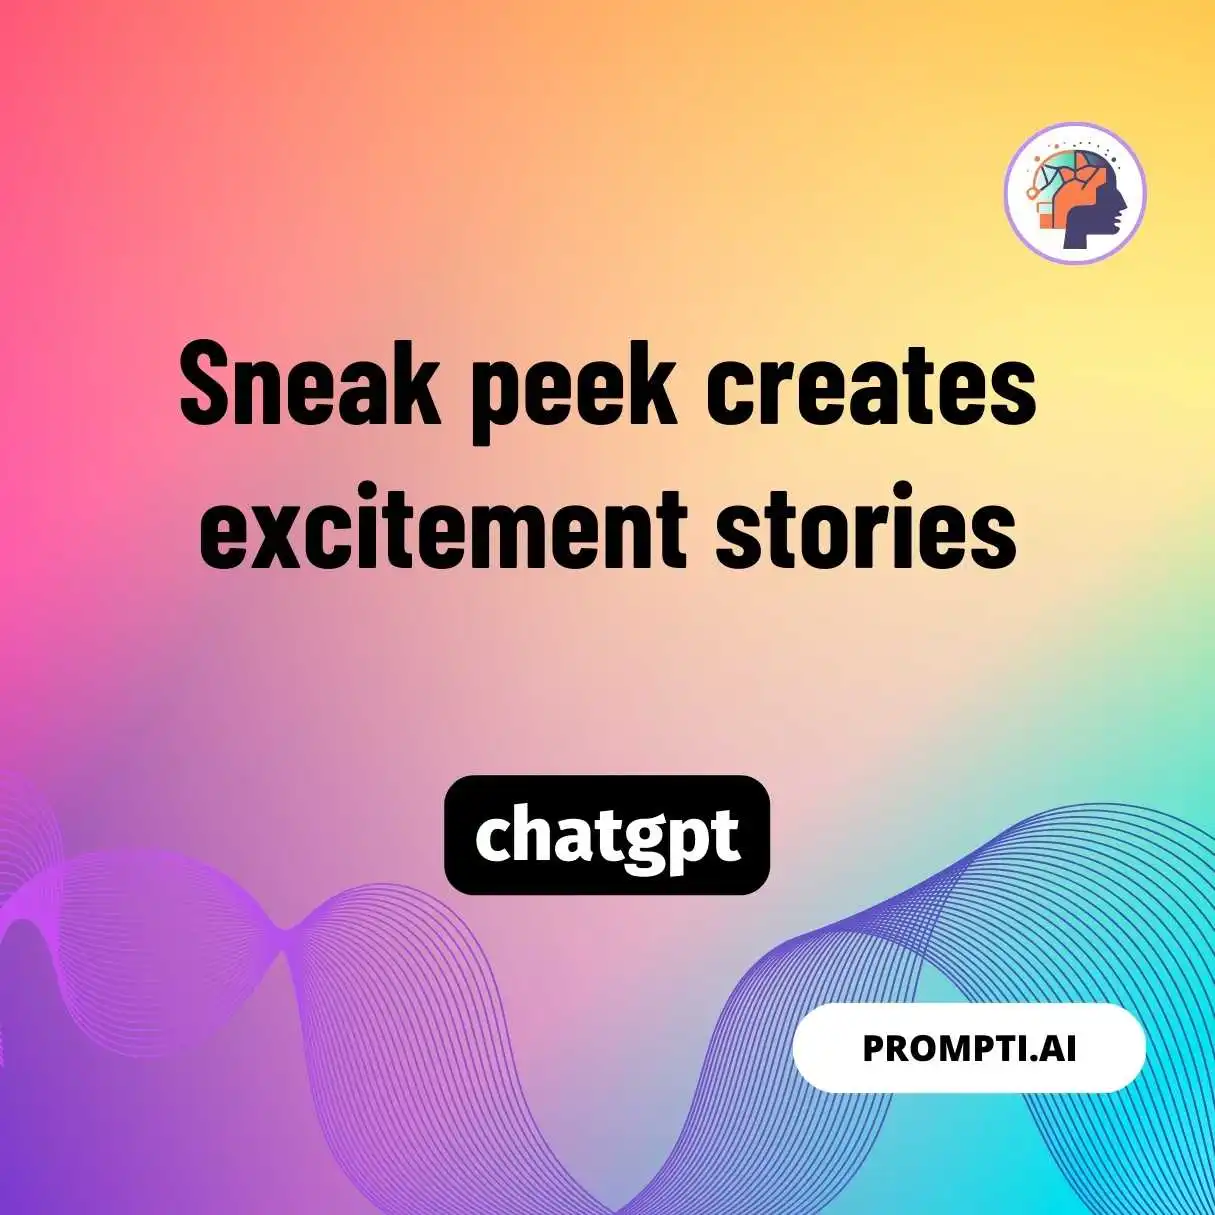 Sneak peek creates excitement stories